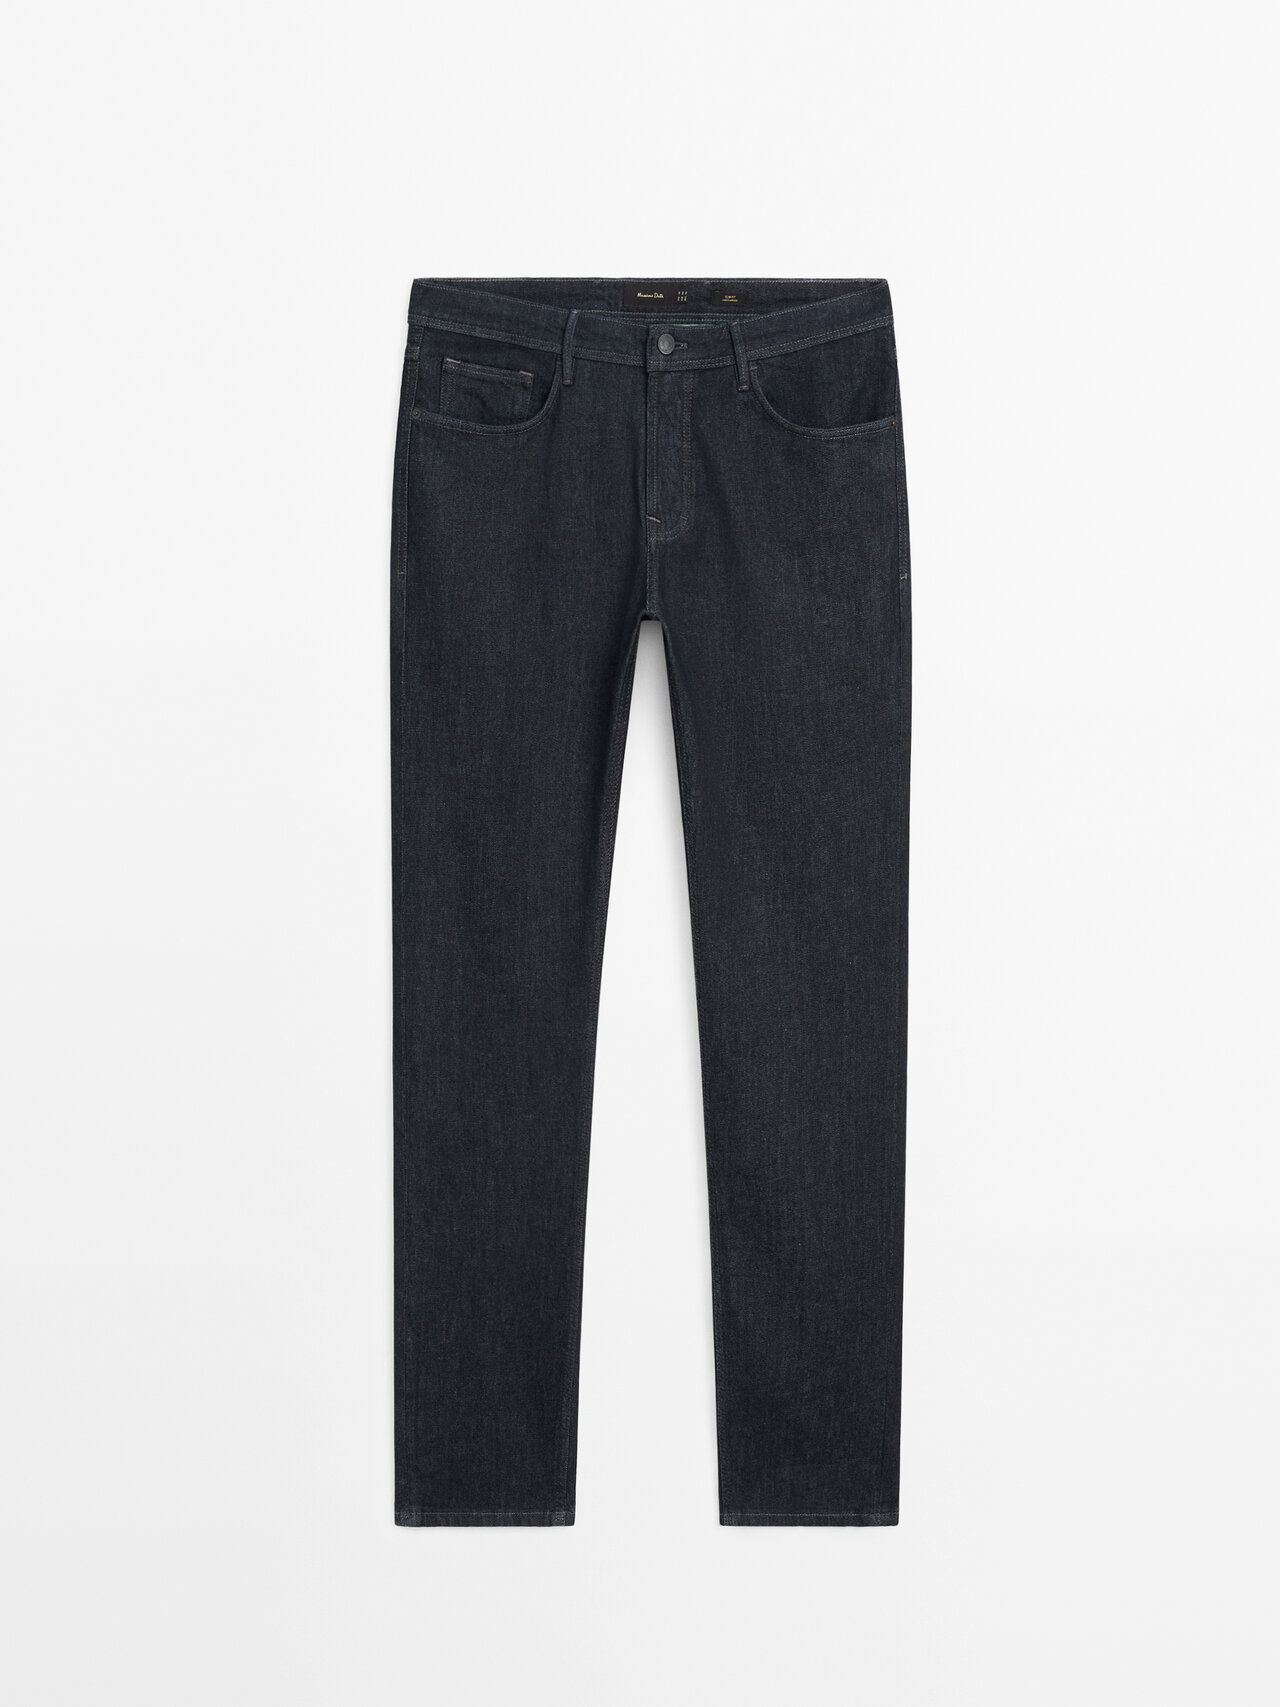 Massimo Dutti Slim Fit Jeans In Indigo